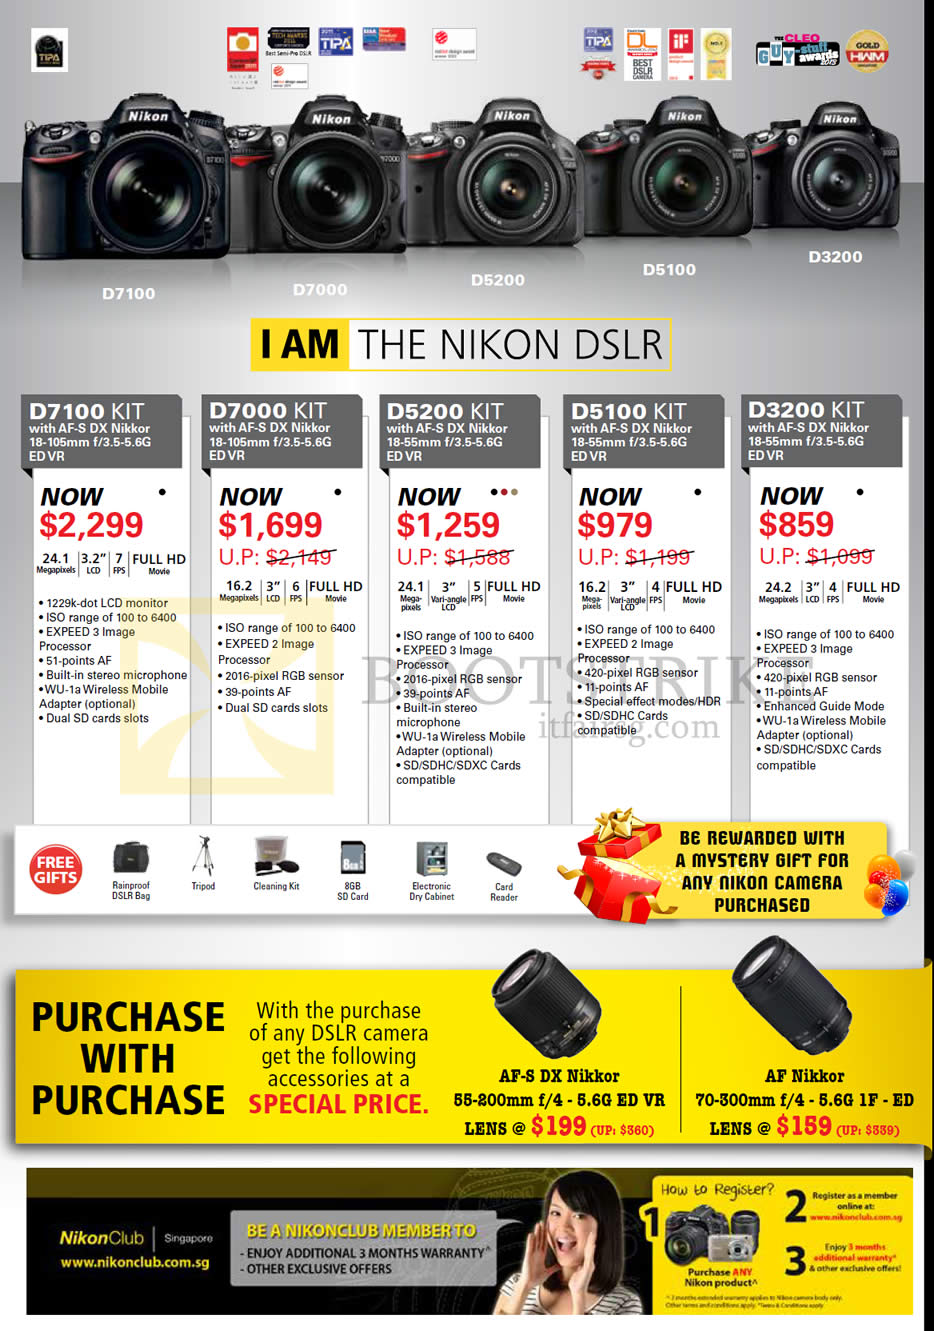 COMEX 2013 price list image brochure of Nikon Digital Cameras DSLR D7100, D7000, D5200, D5100, D3200